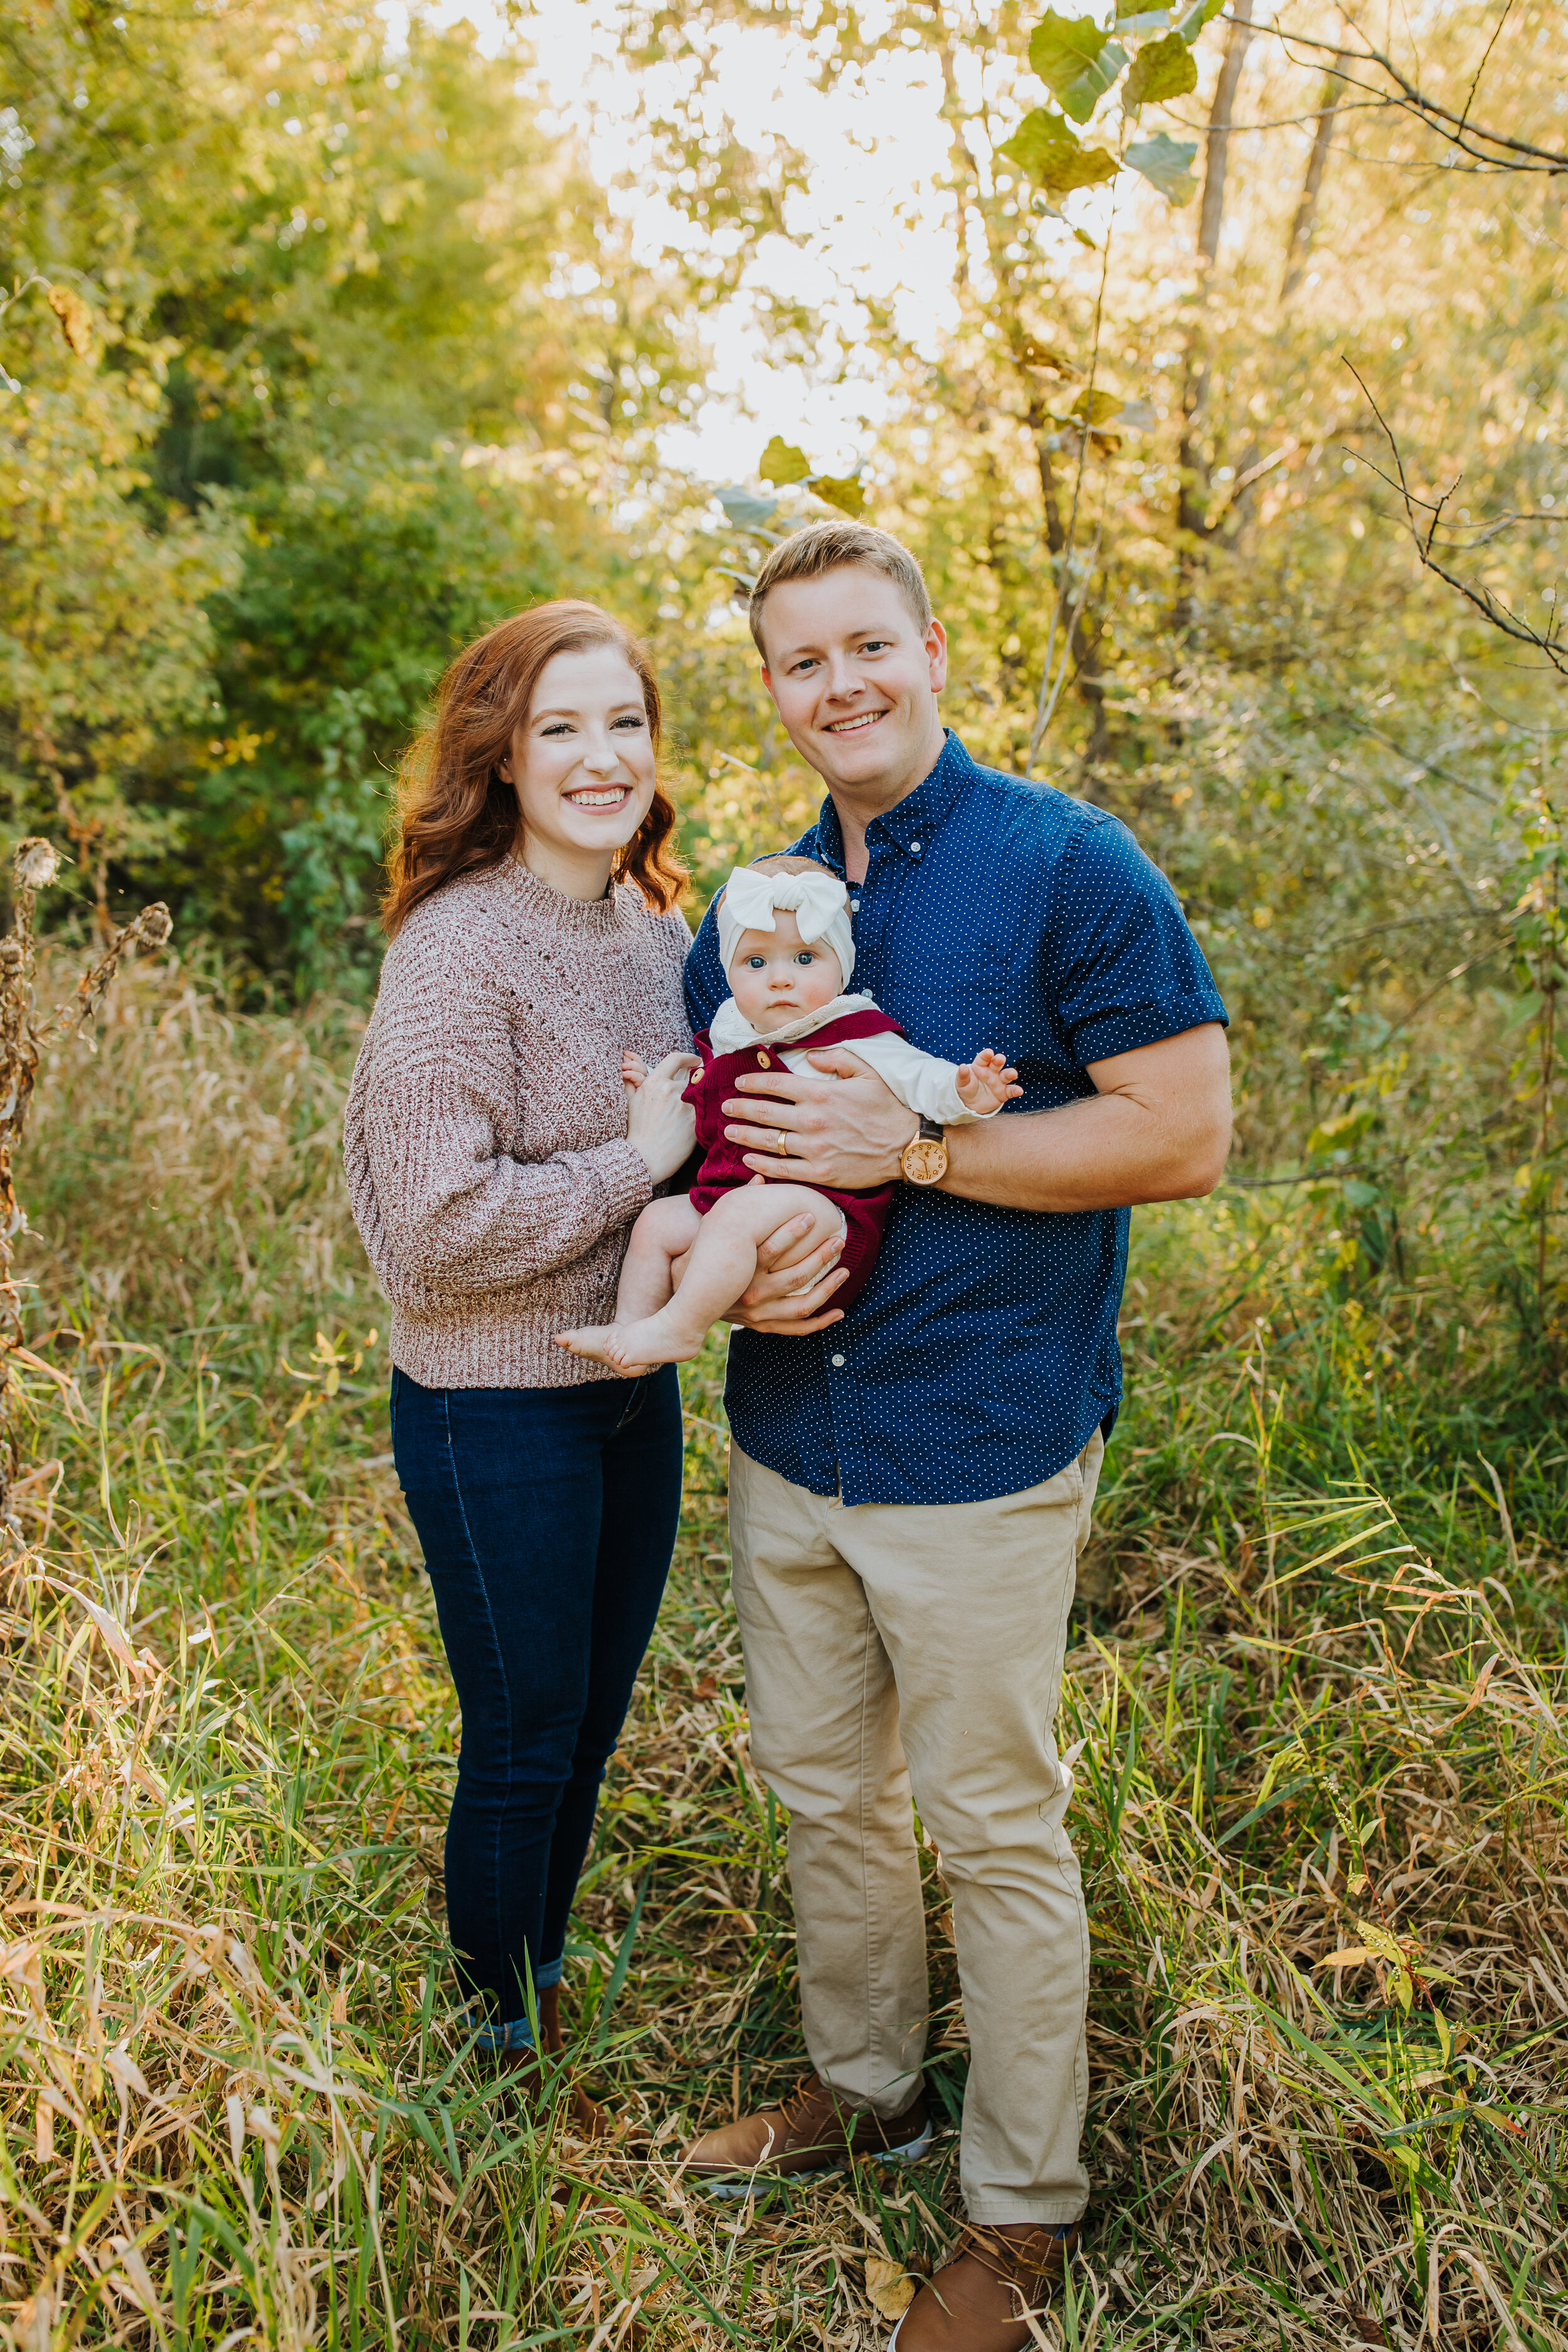 Unger Family Photos 2020 - Nathaniel Jensen Photography - Omaha Nebraska Family Photographer-11.jpg